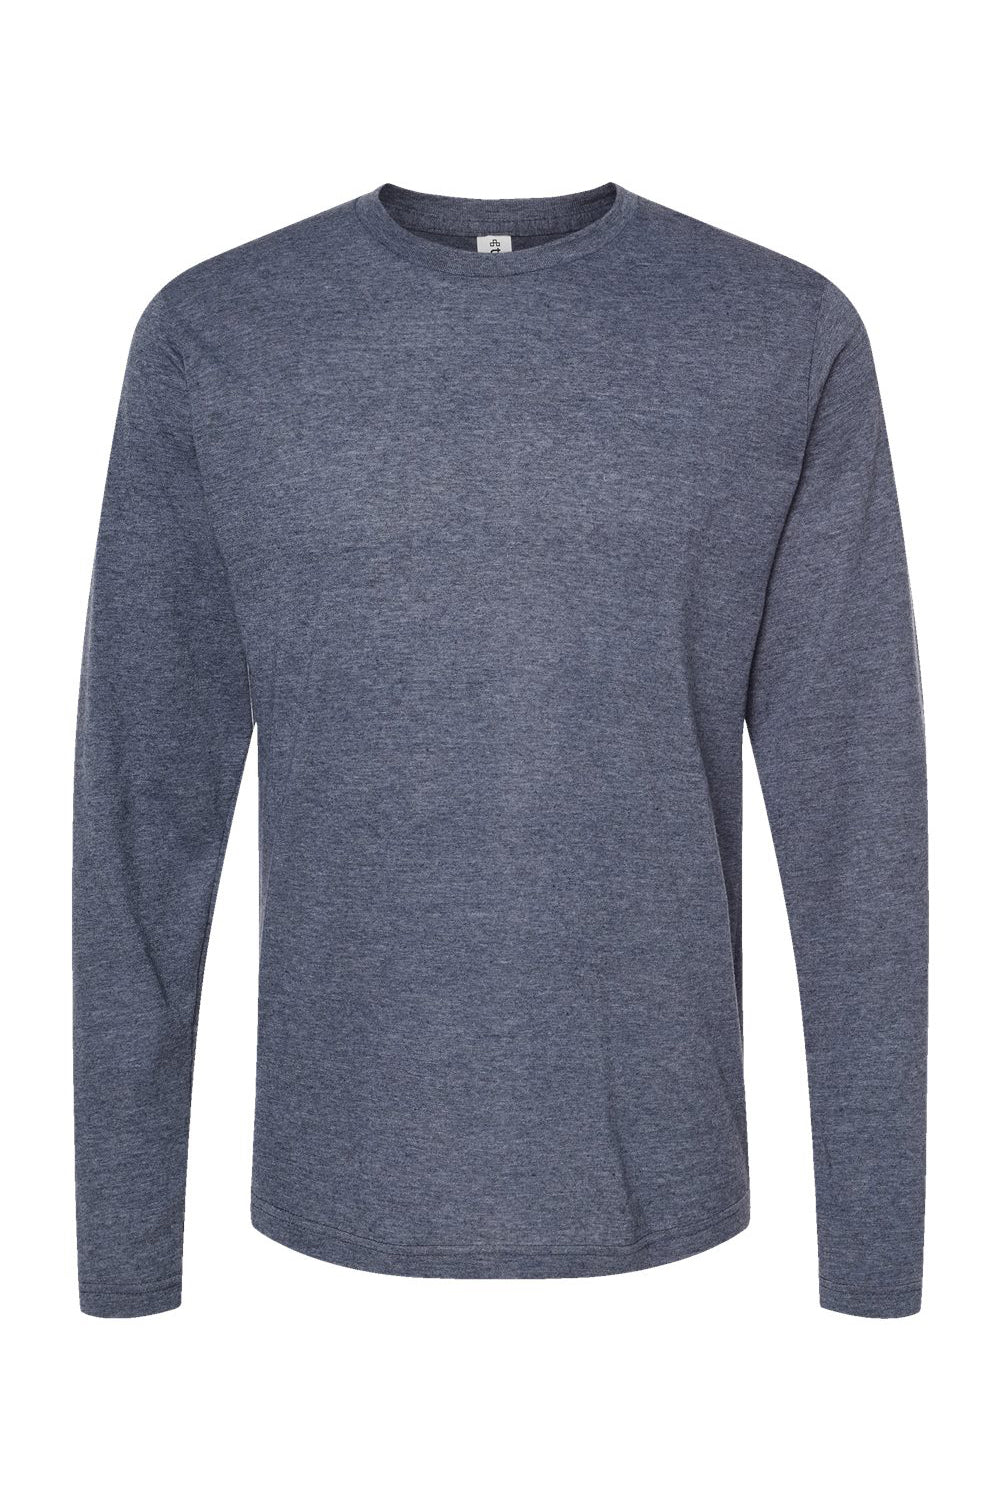 Tultex 242 Mens Poly-Rich Long Sleeve Crewneck T-Shirt Heather Navy Blue Flat Front